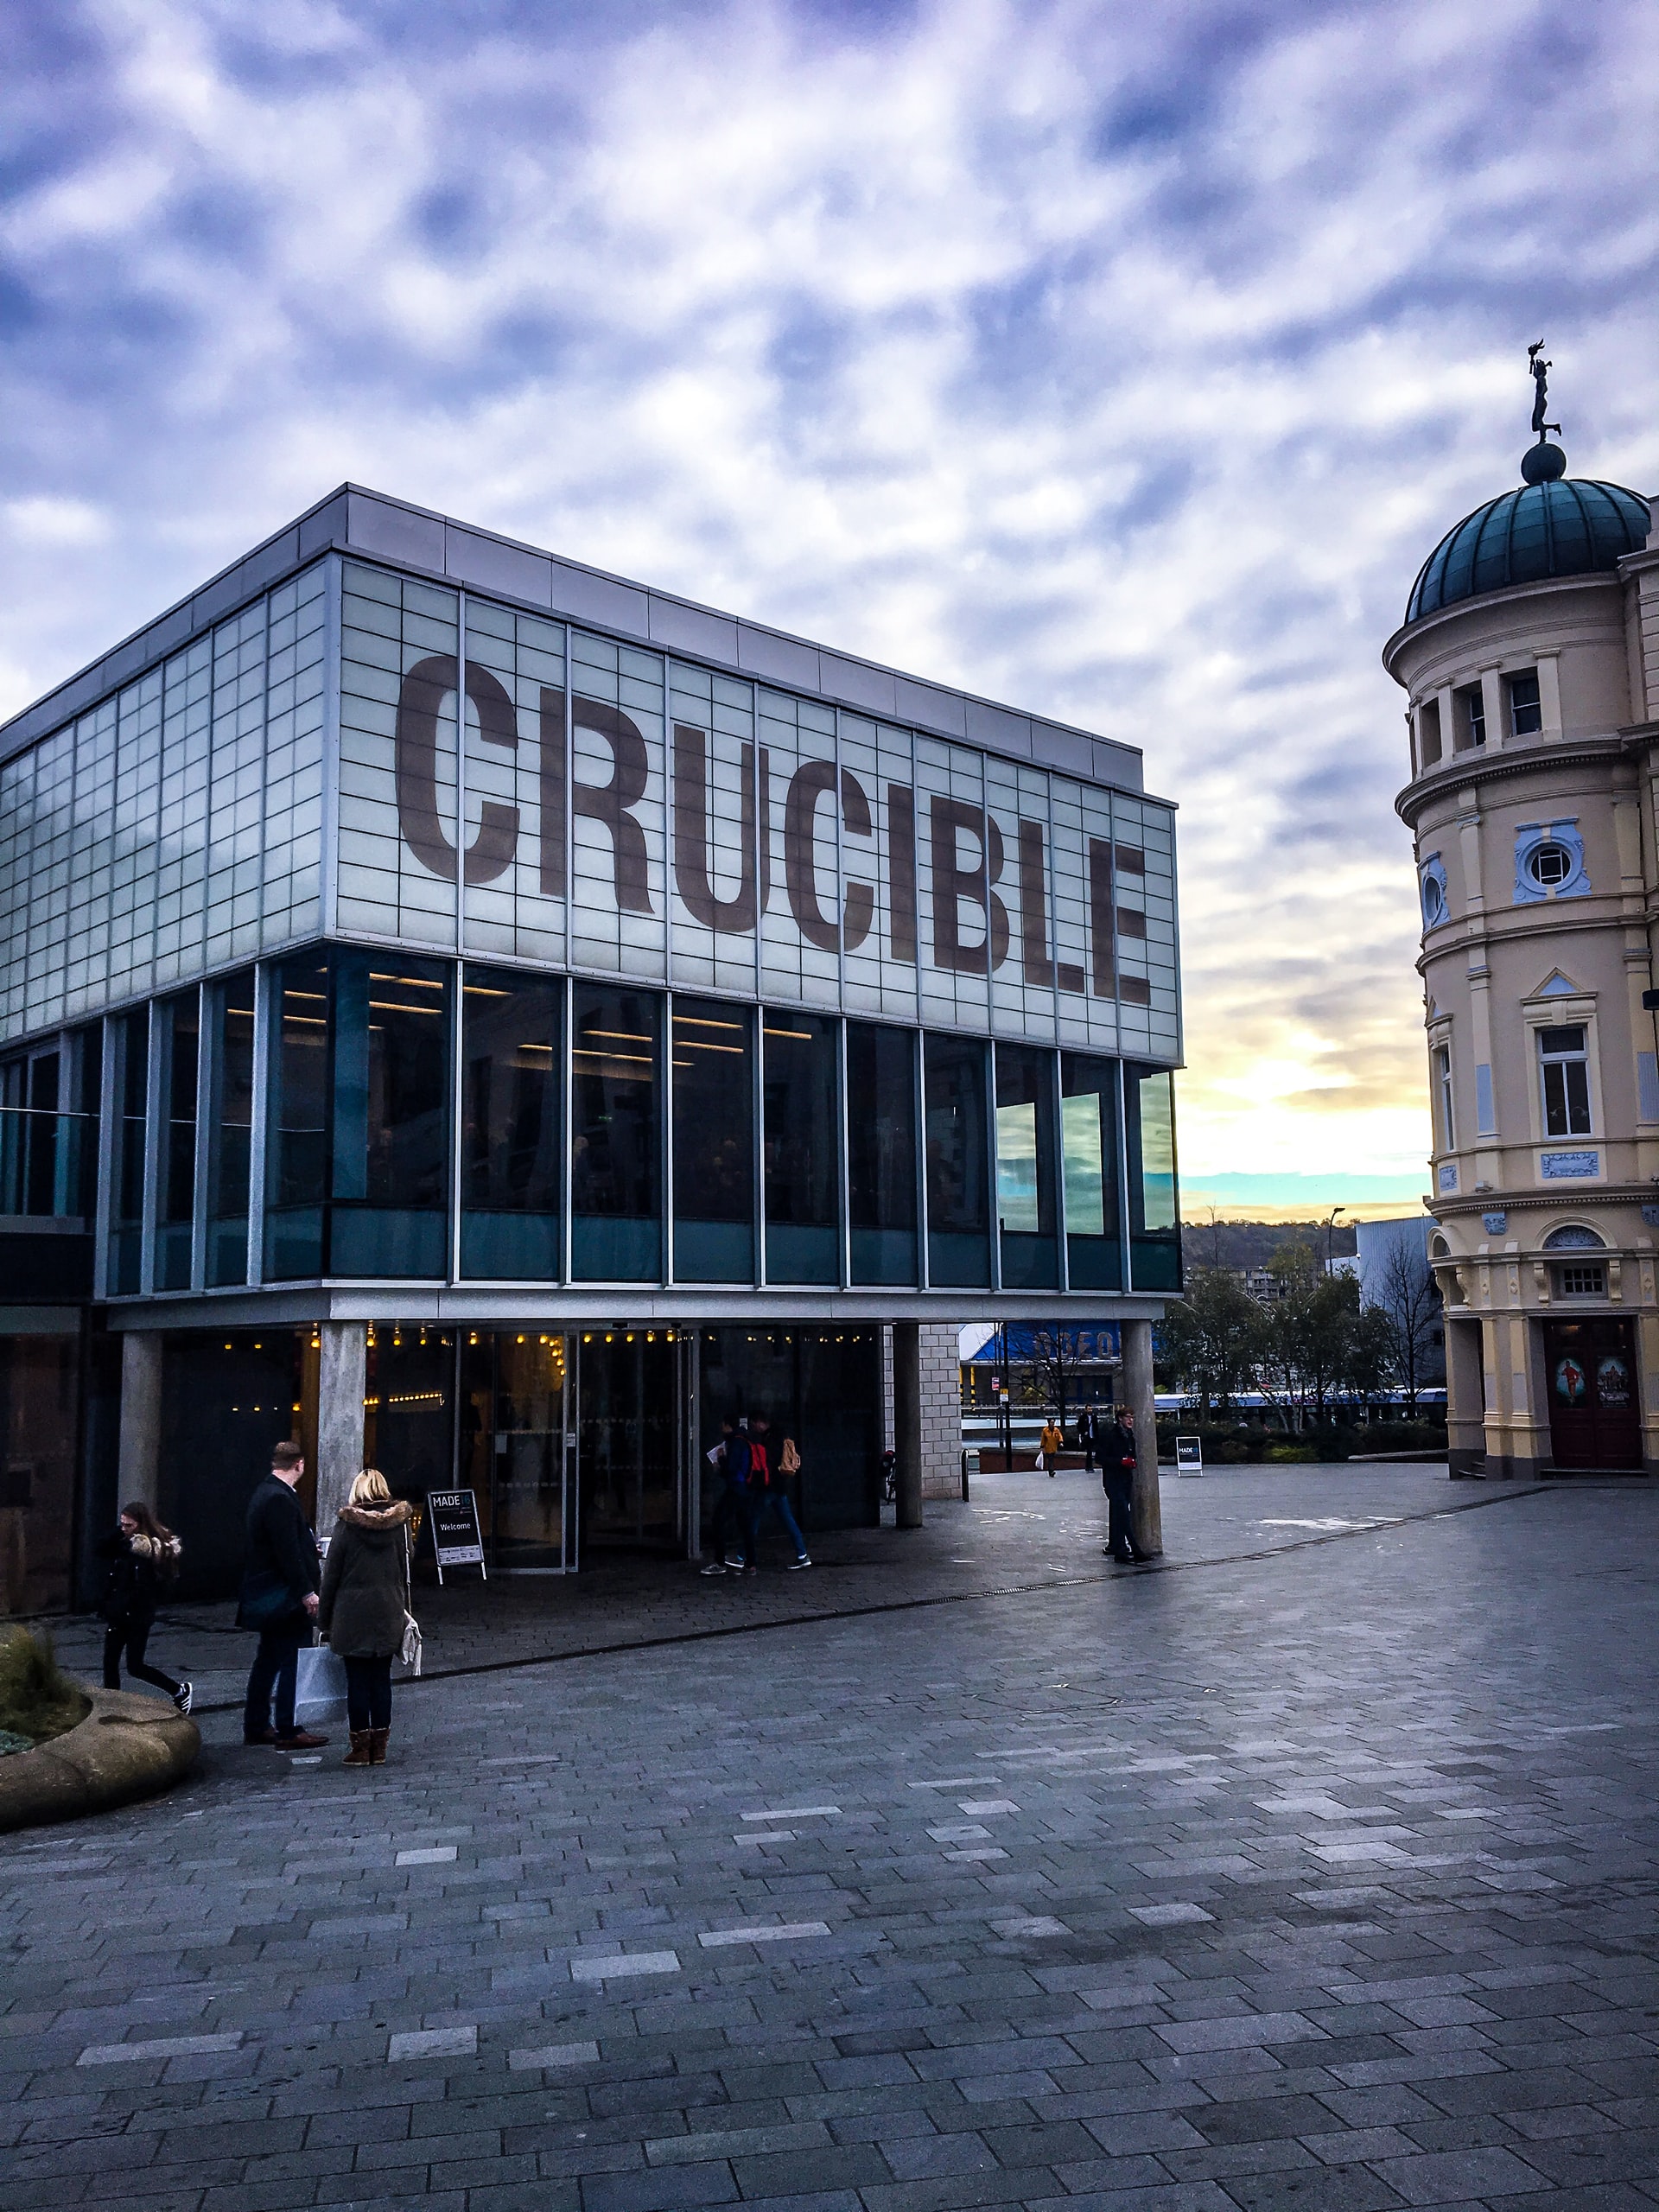 The Crucible Theatre, venue for the World Snooker Championship